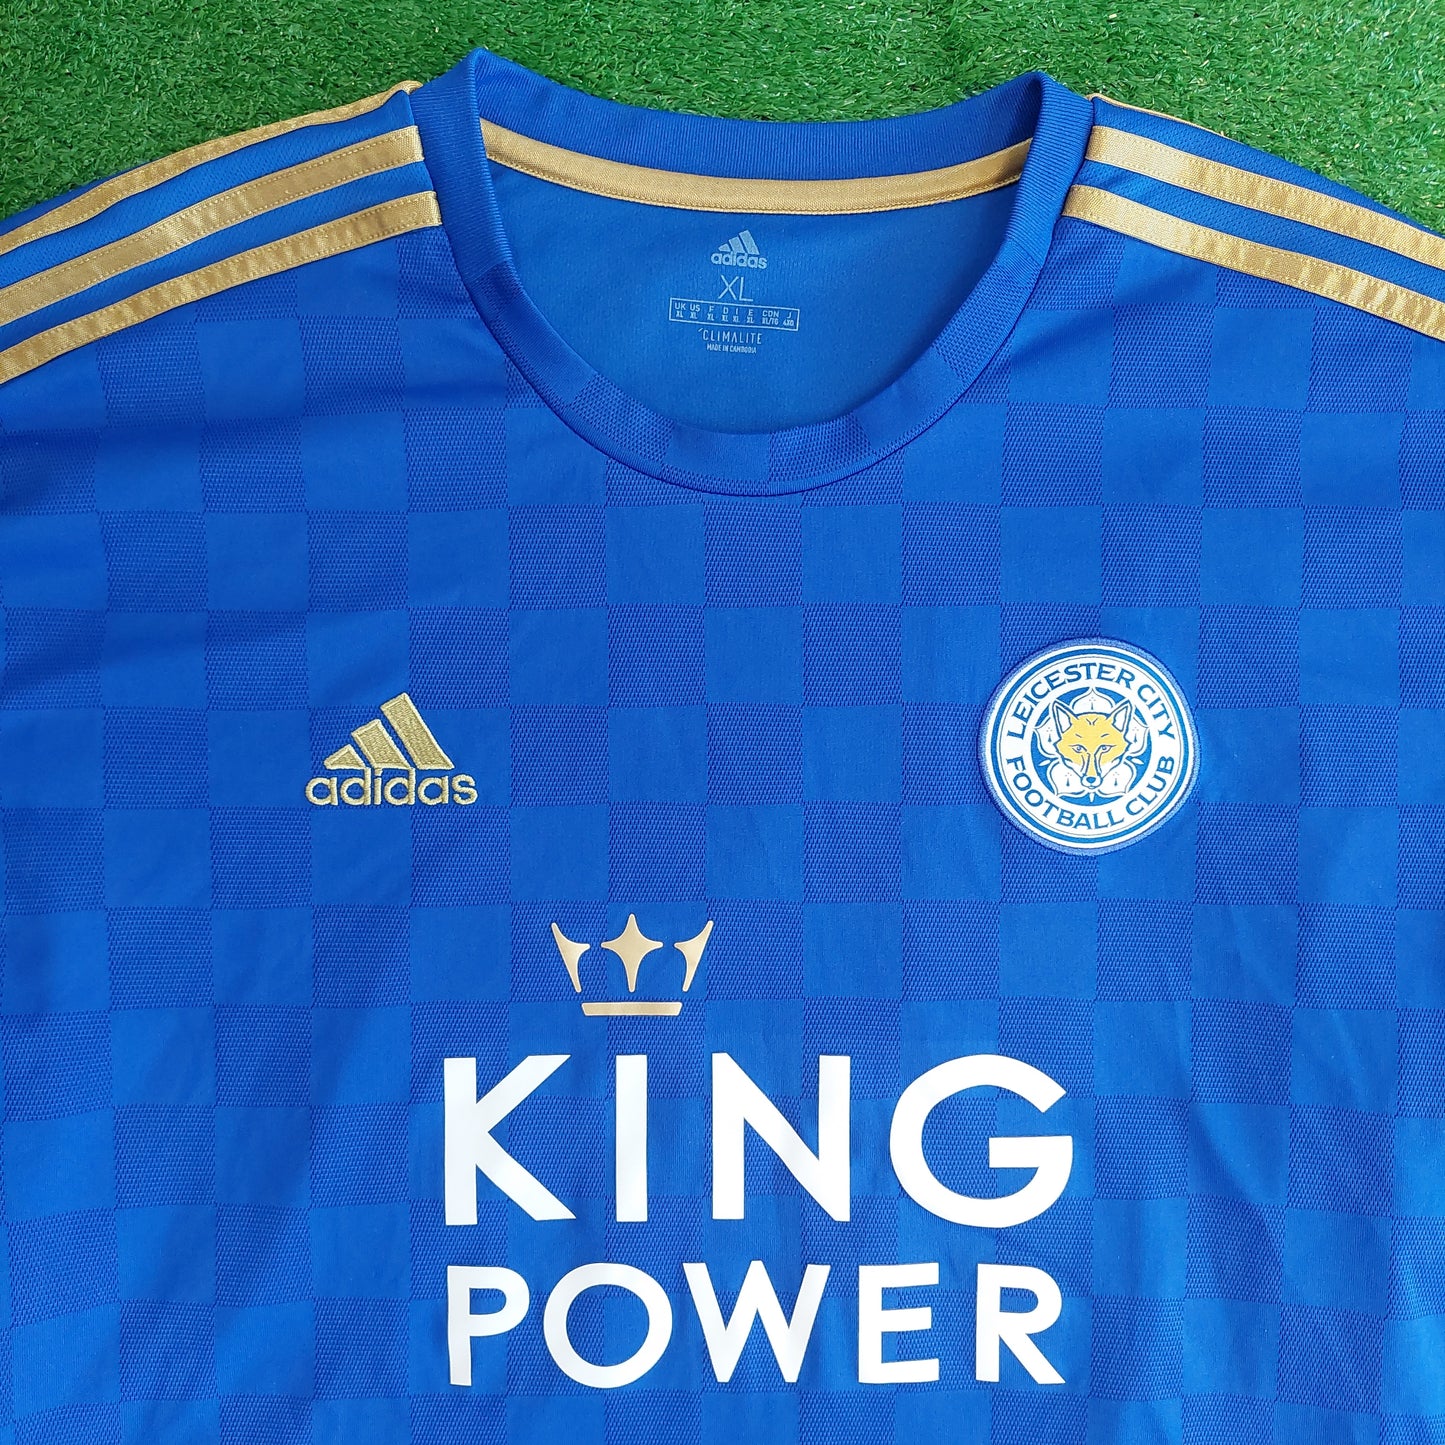 Leicester City 2019/20 Home Shirt (Excellent) - Size XL